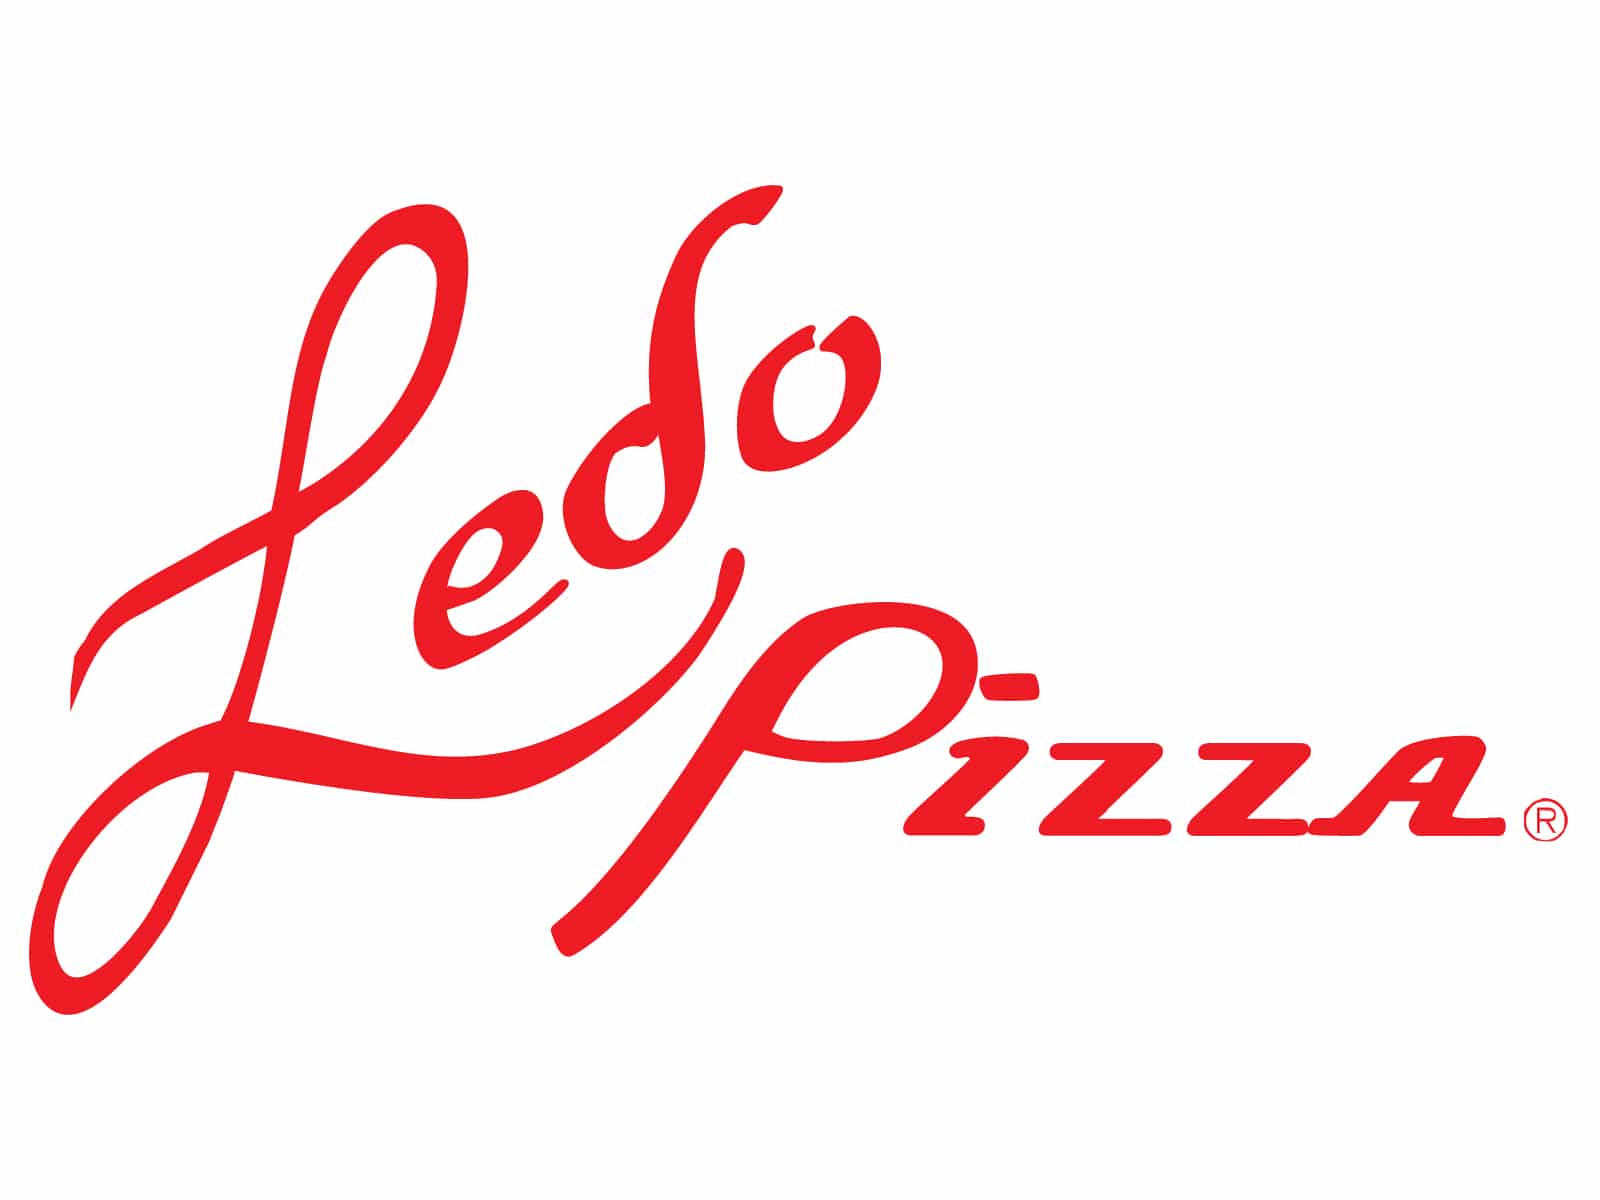 ledopizza.com/wp-content/uploads/2021/06/Ledo-P...